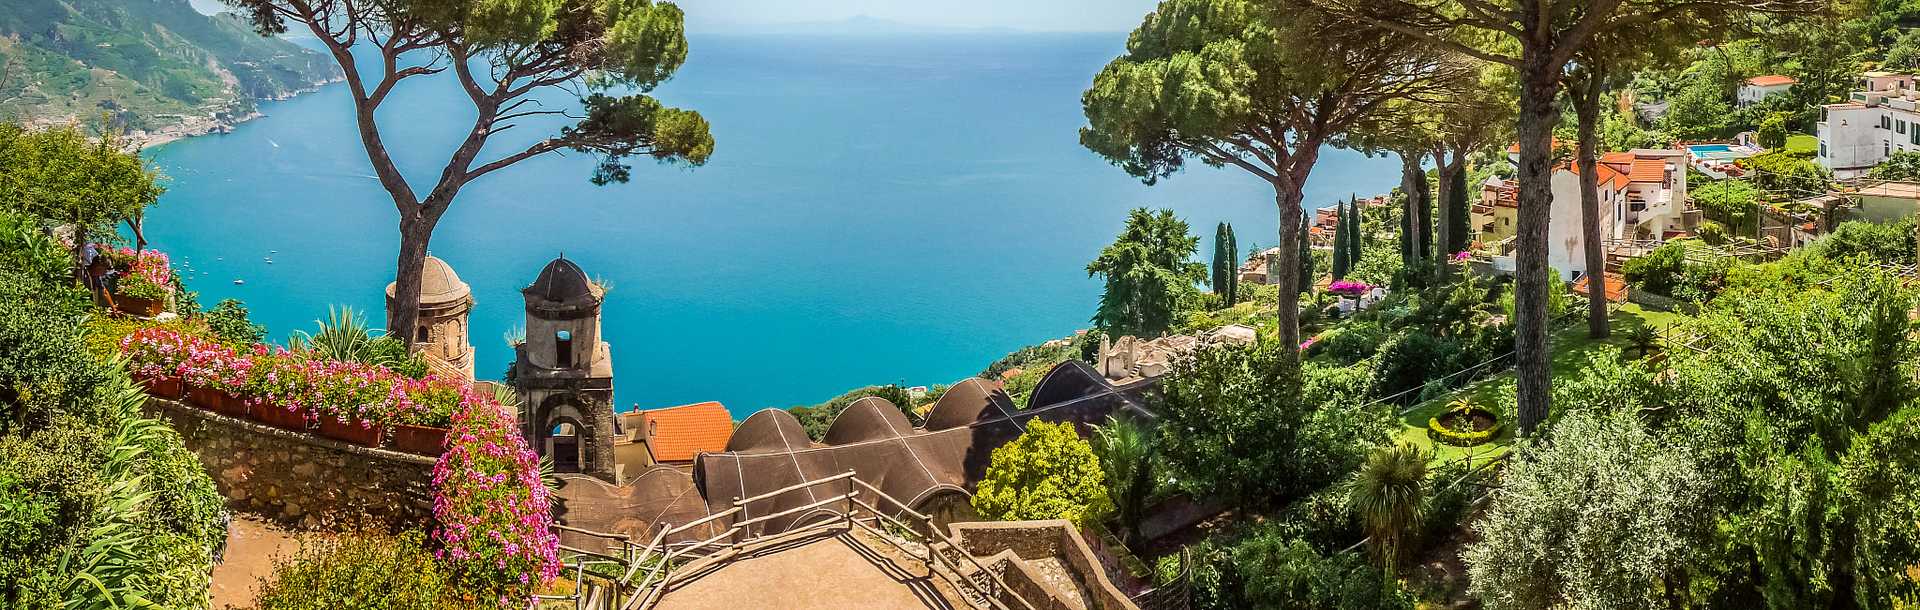 Villa Rufolo’s Gardens in Ravello with view of the Amalfi Coast, Italy